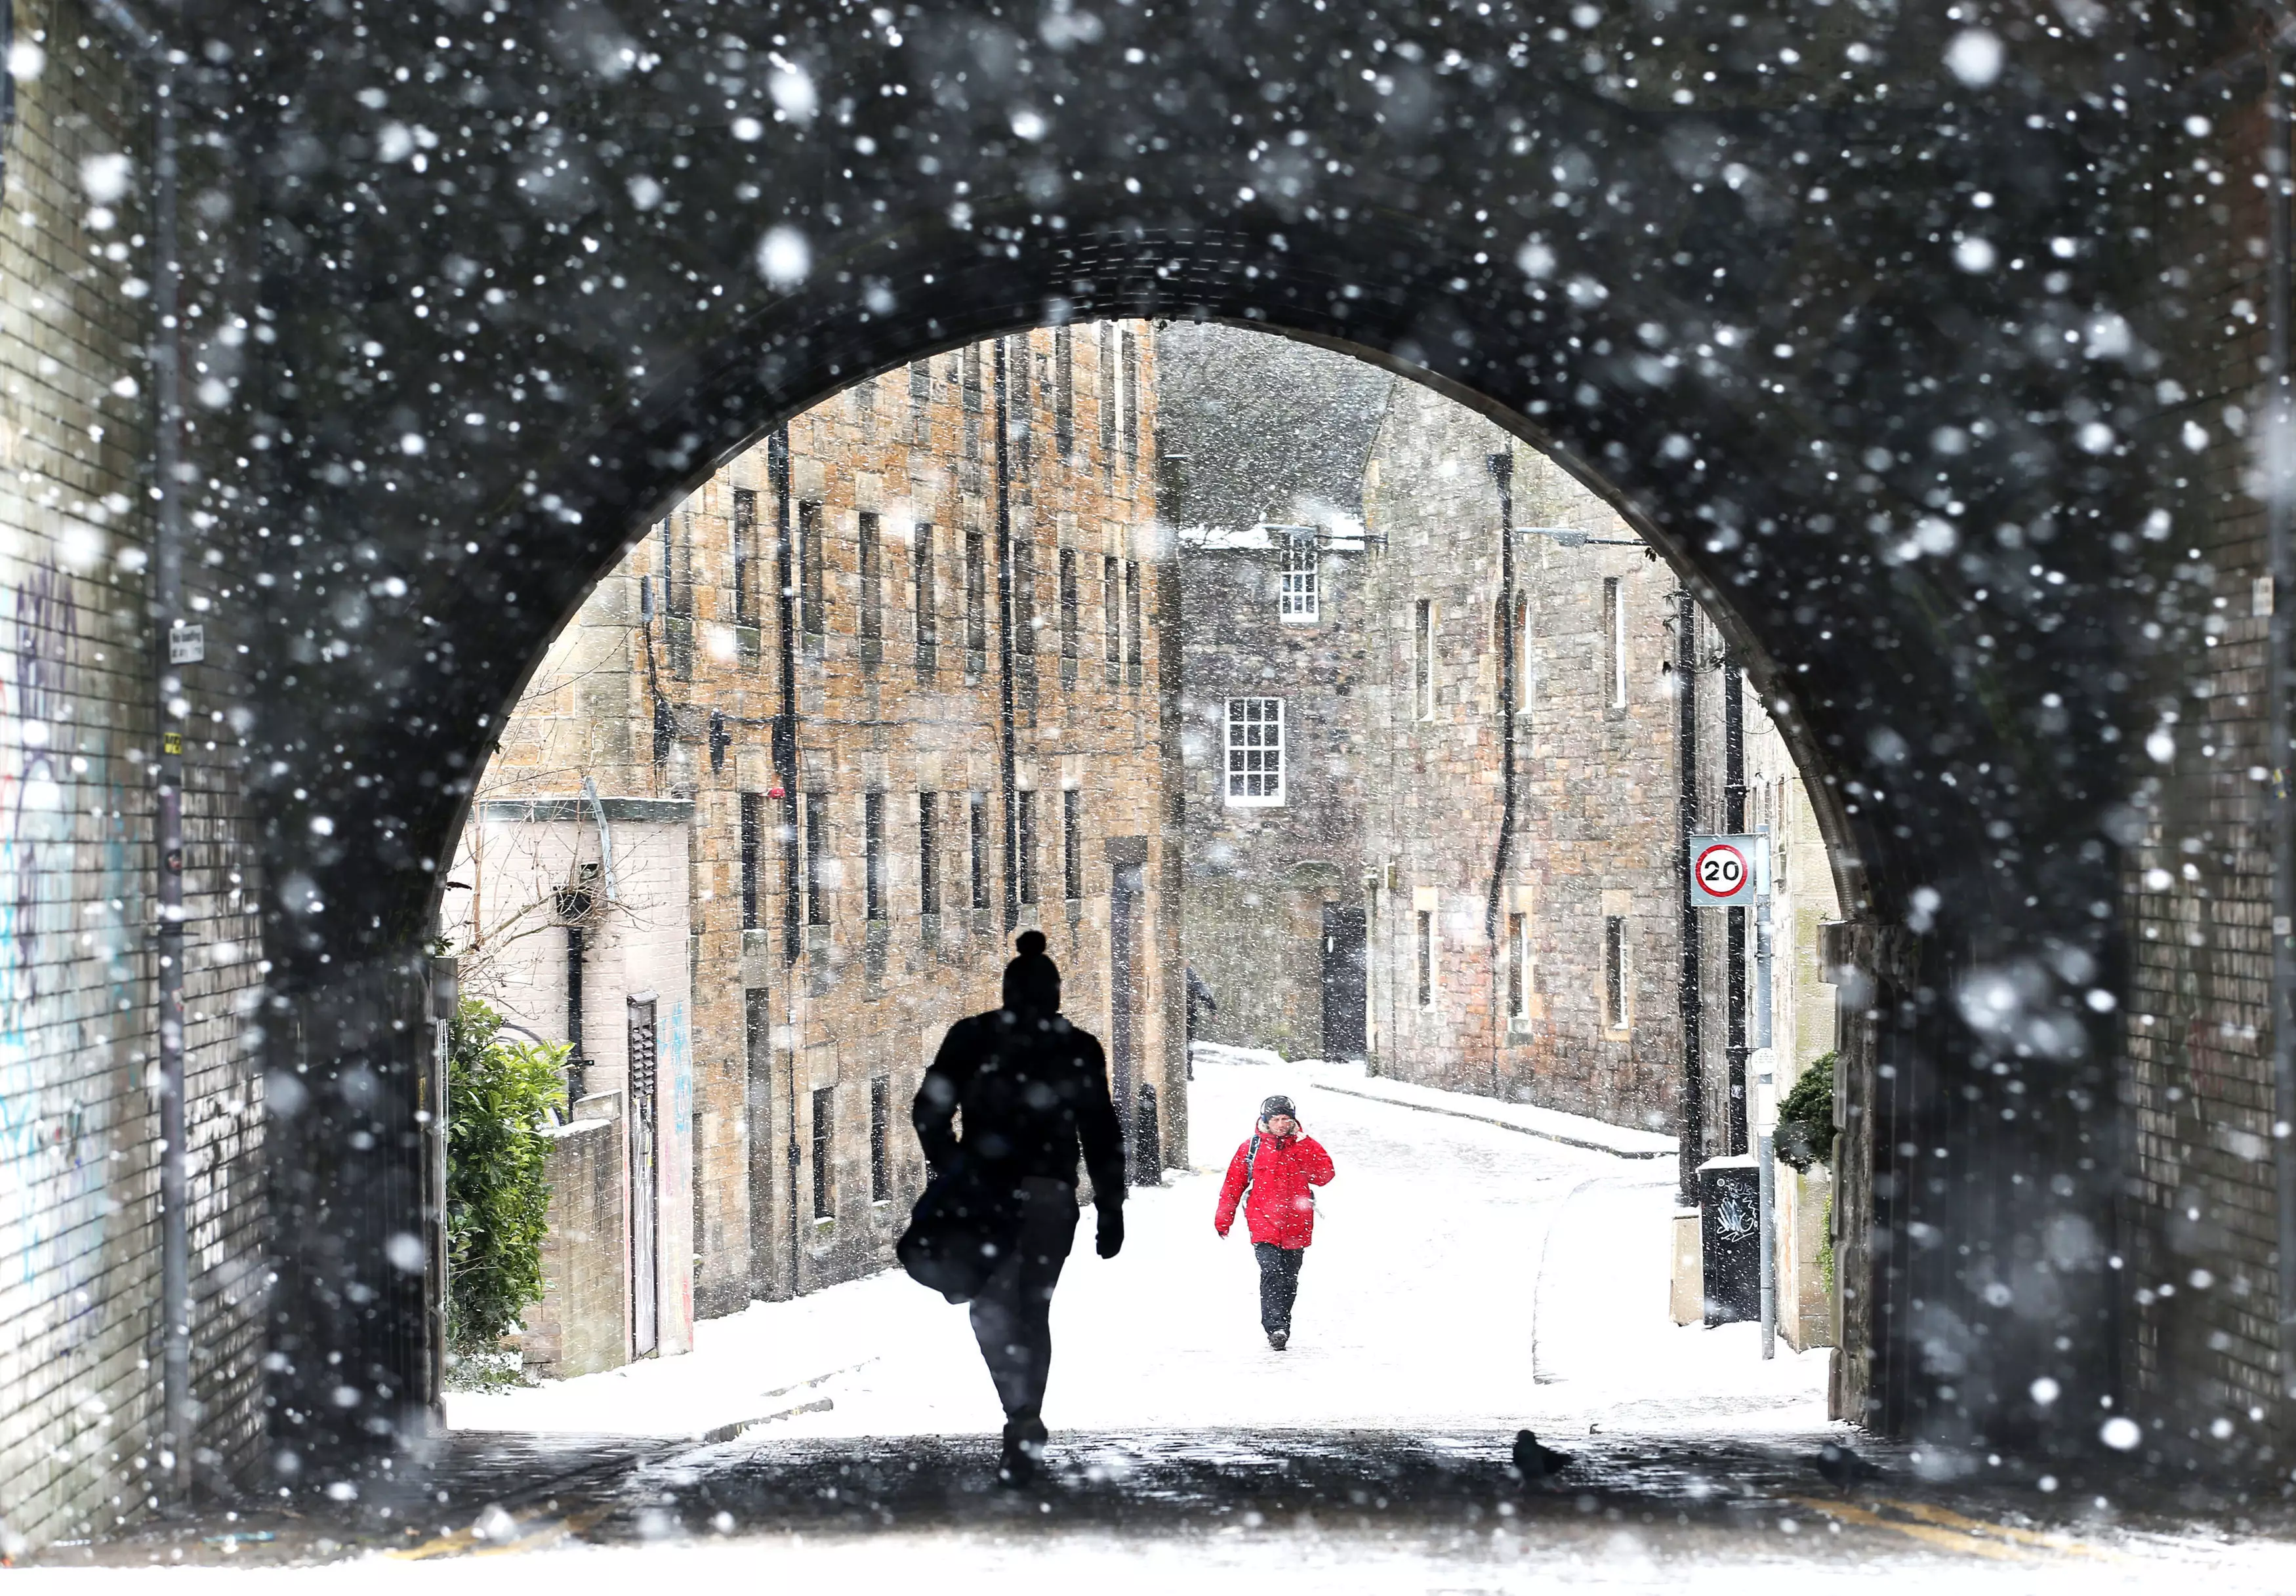 Edinburgh still looking lovely in the snow.